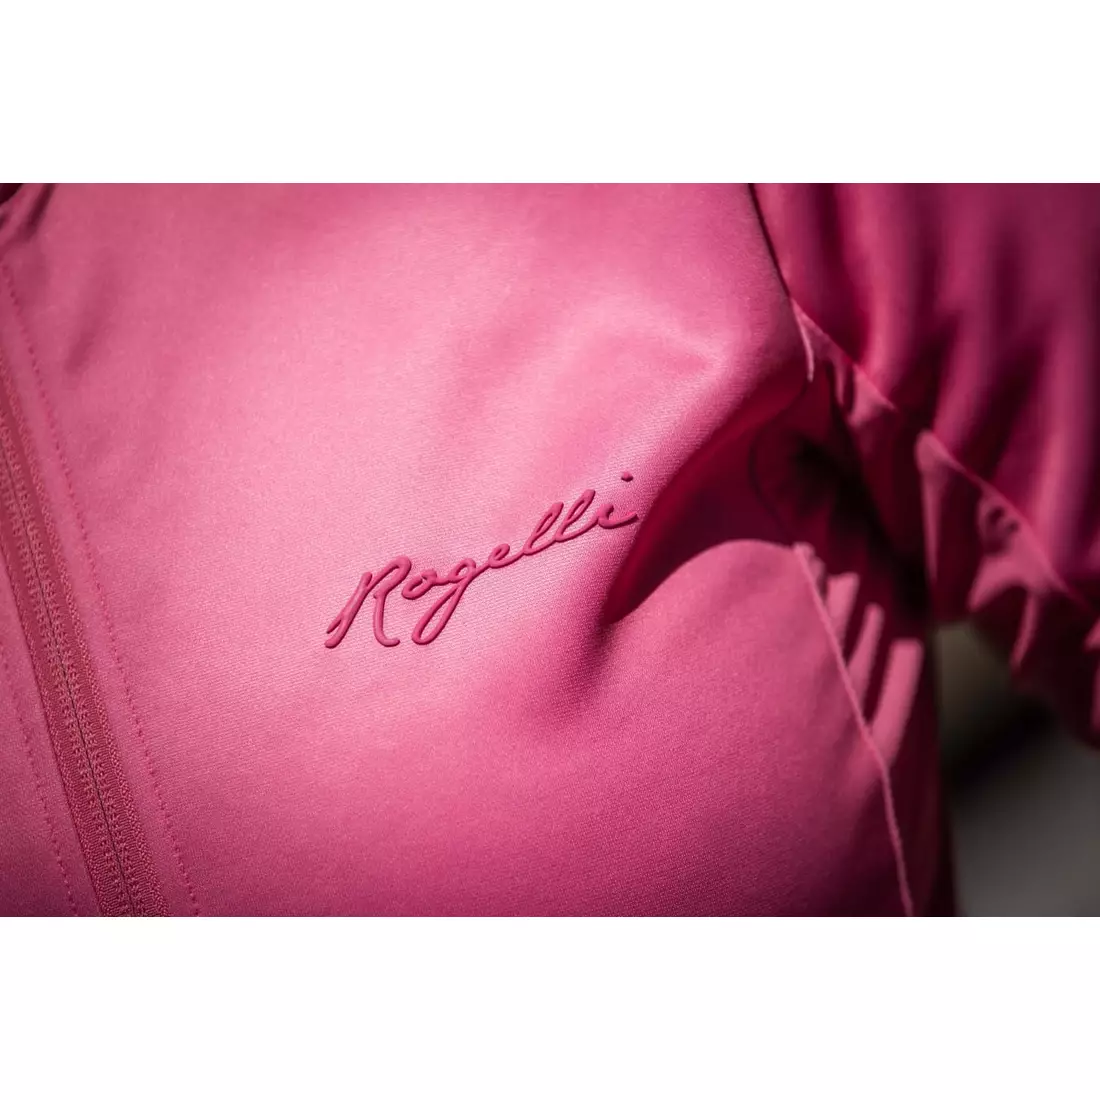 Rogelli CORE damska ocieplana bluza rowerowa, różowa 